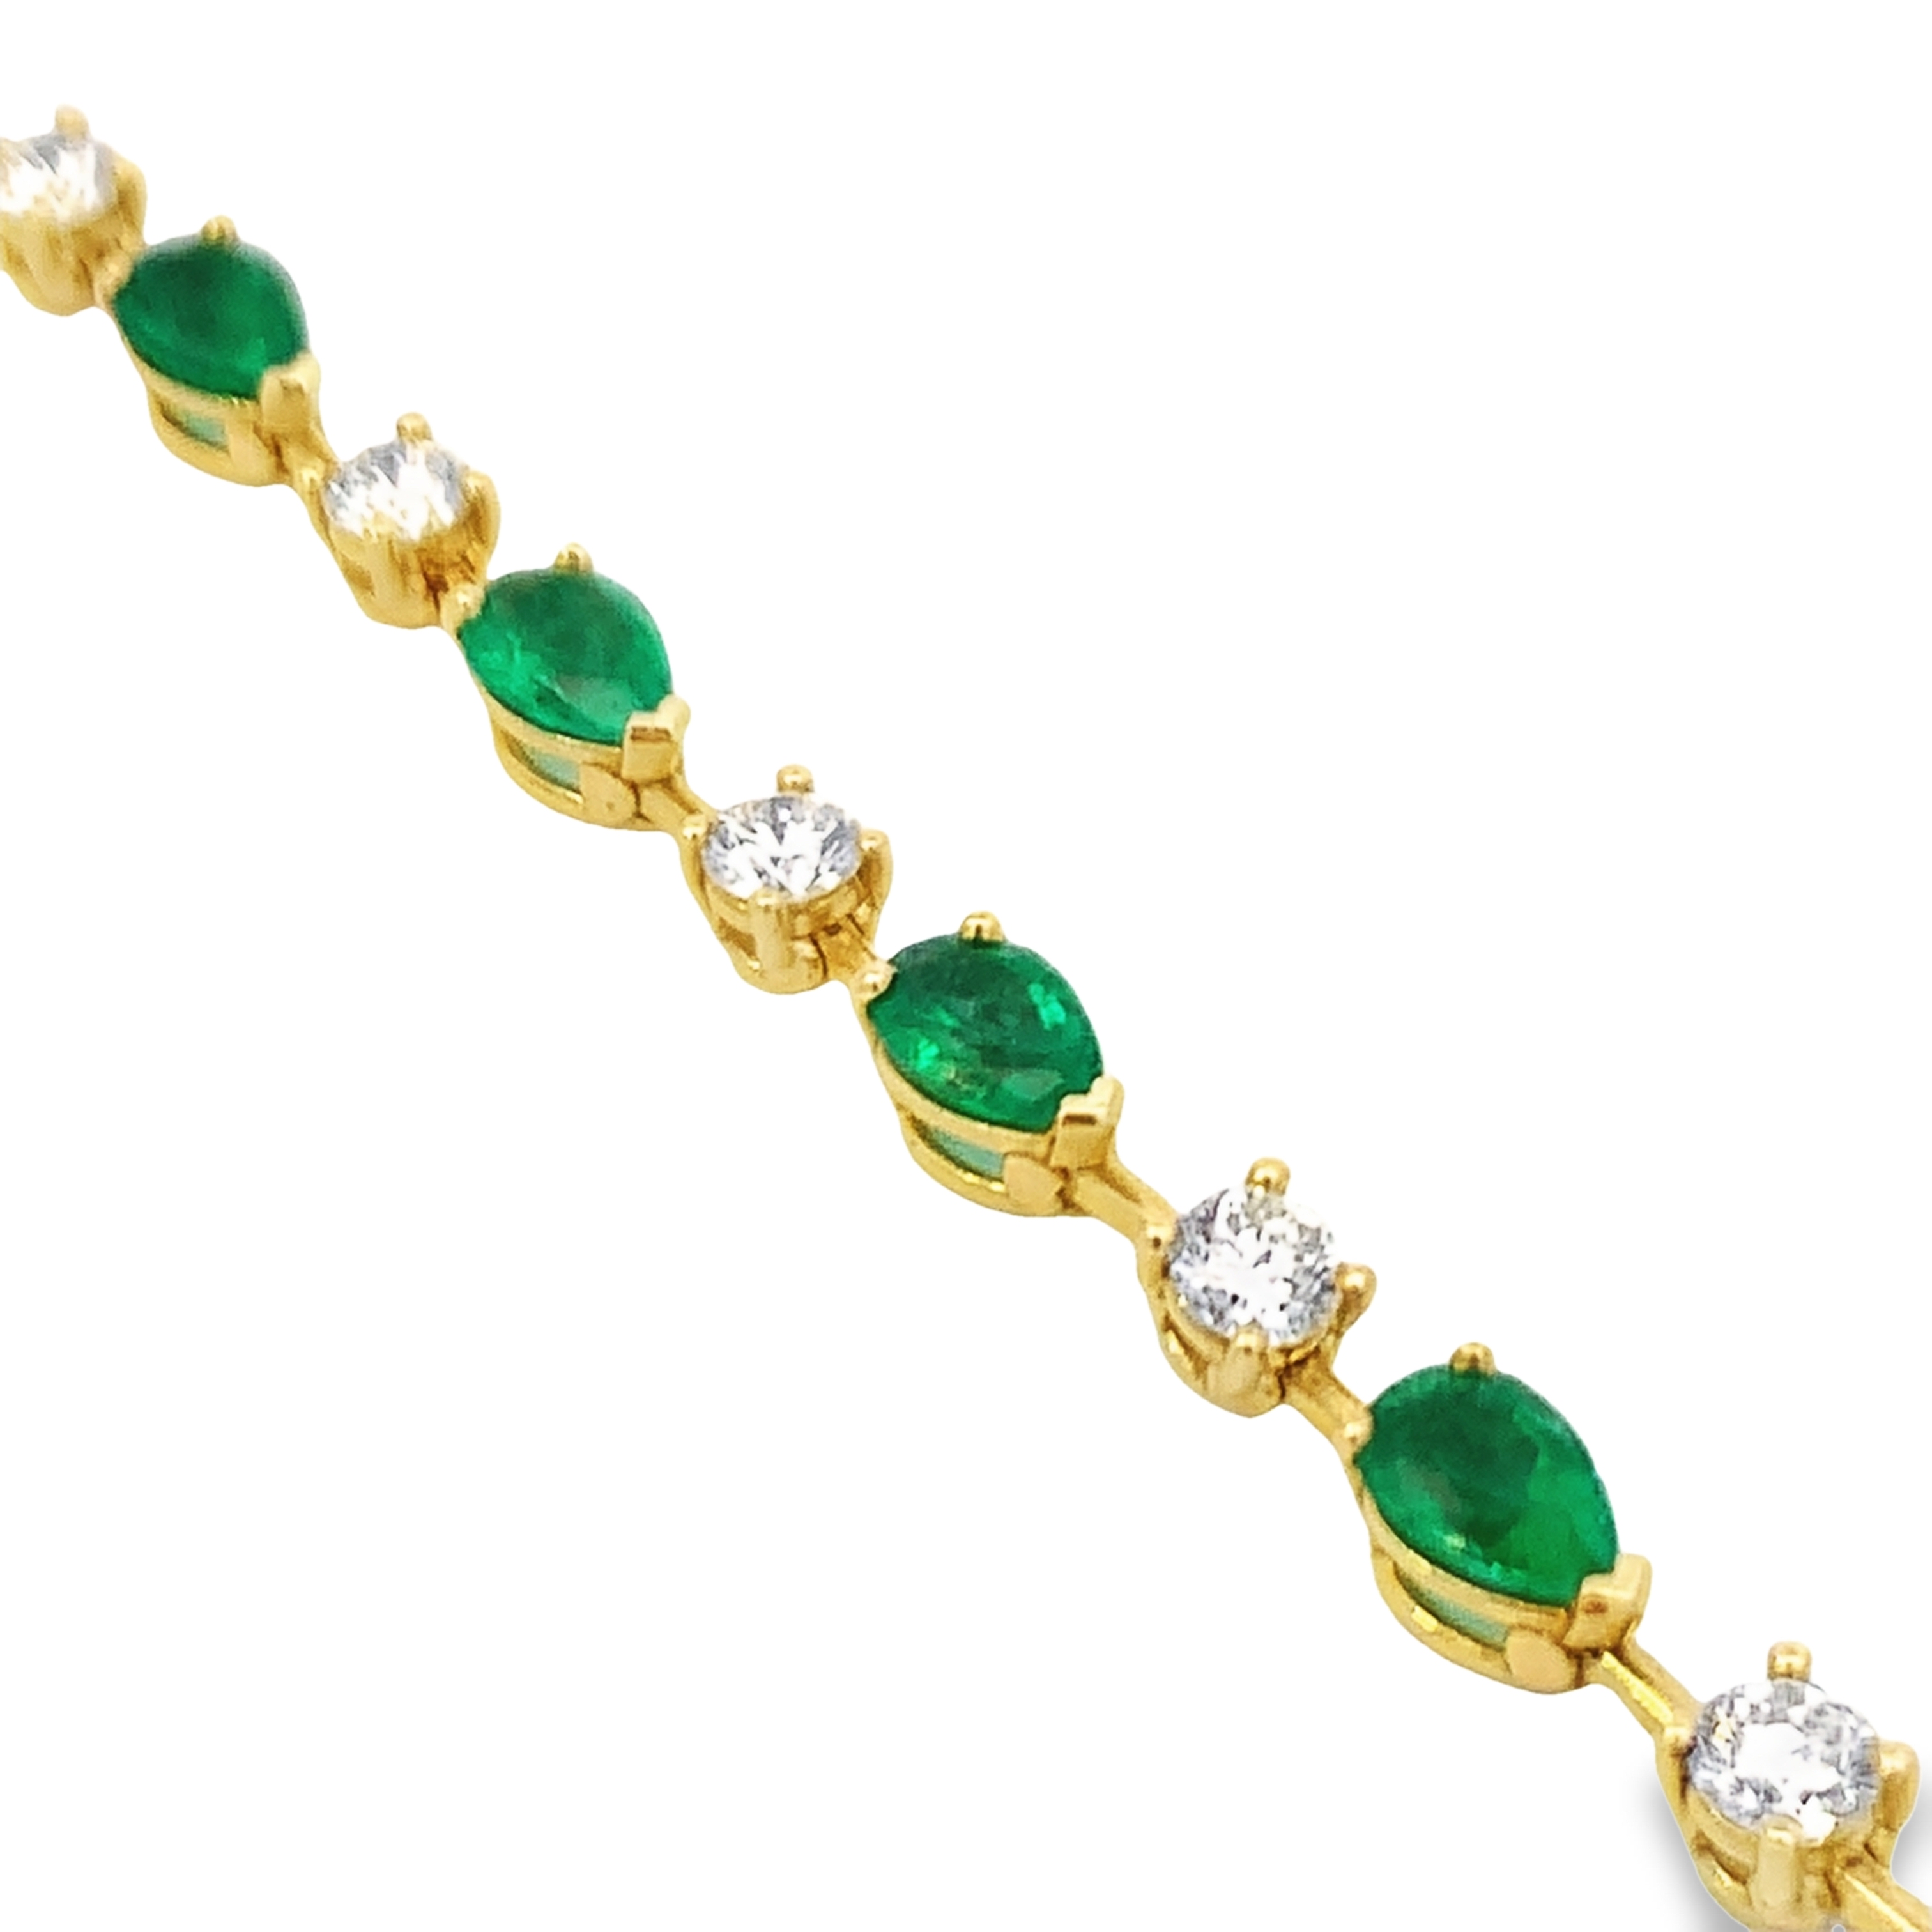 Norman Silverman 18K Yellow Gold Emerald and Diamond Bracelet